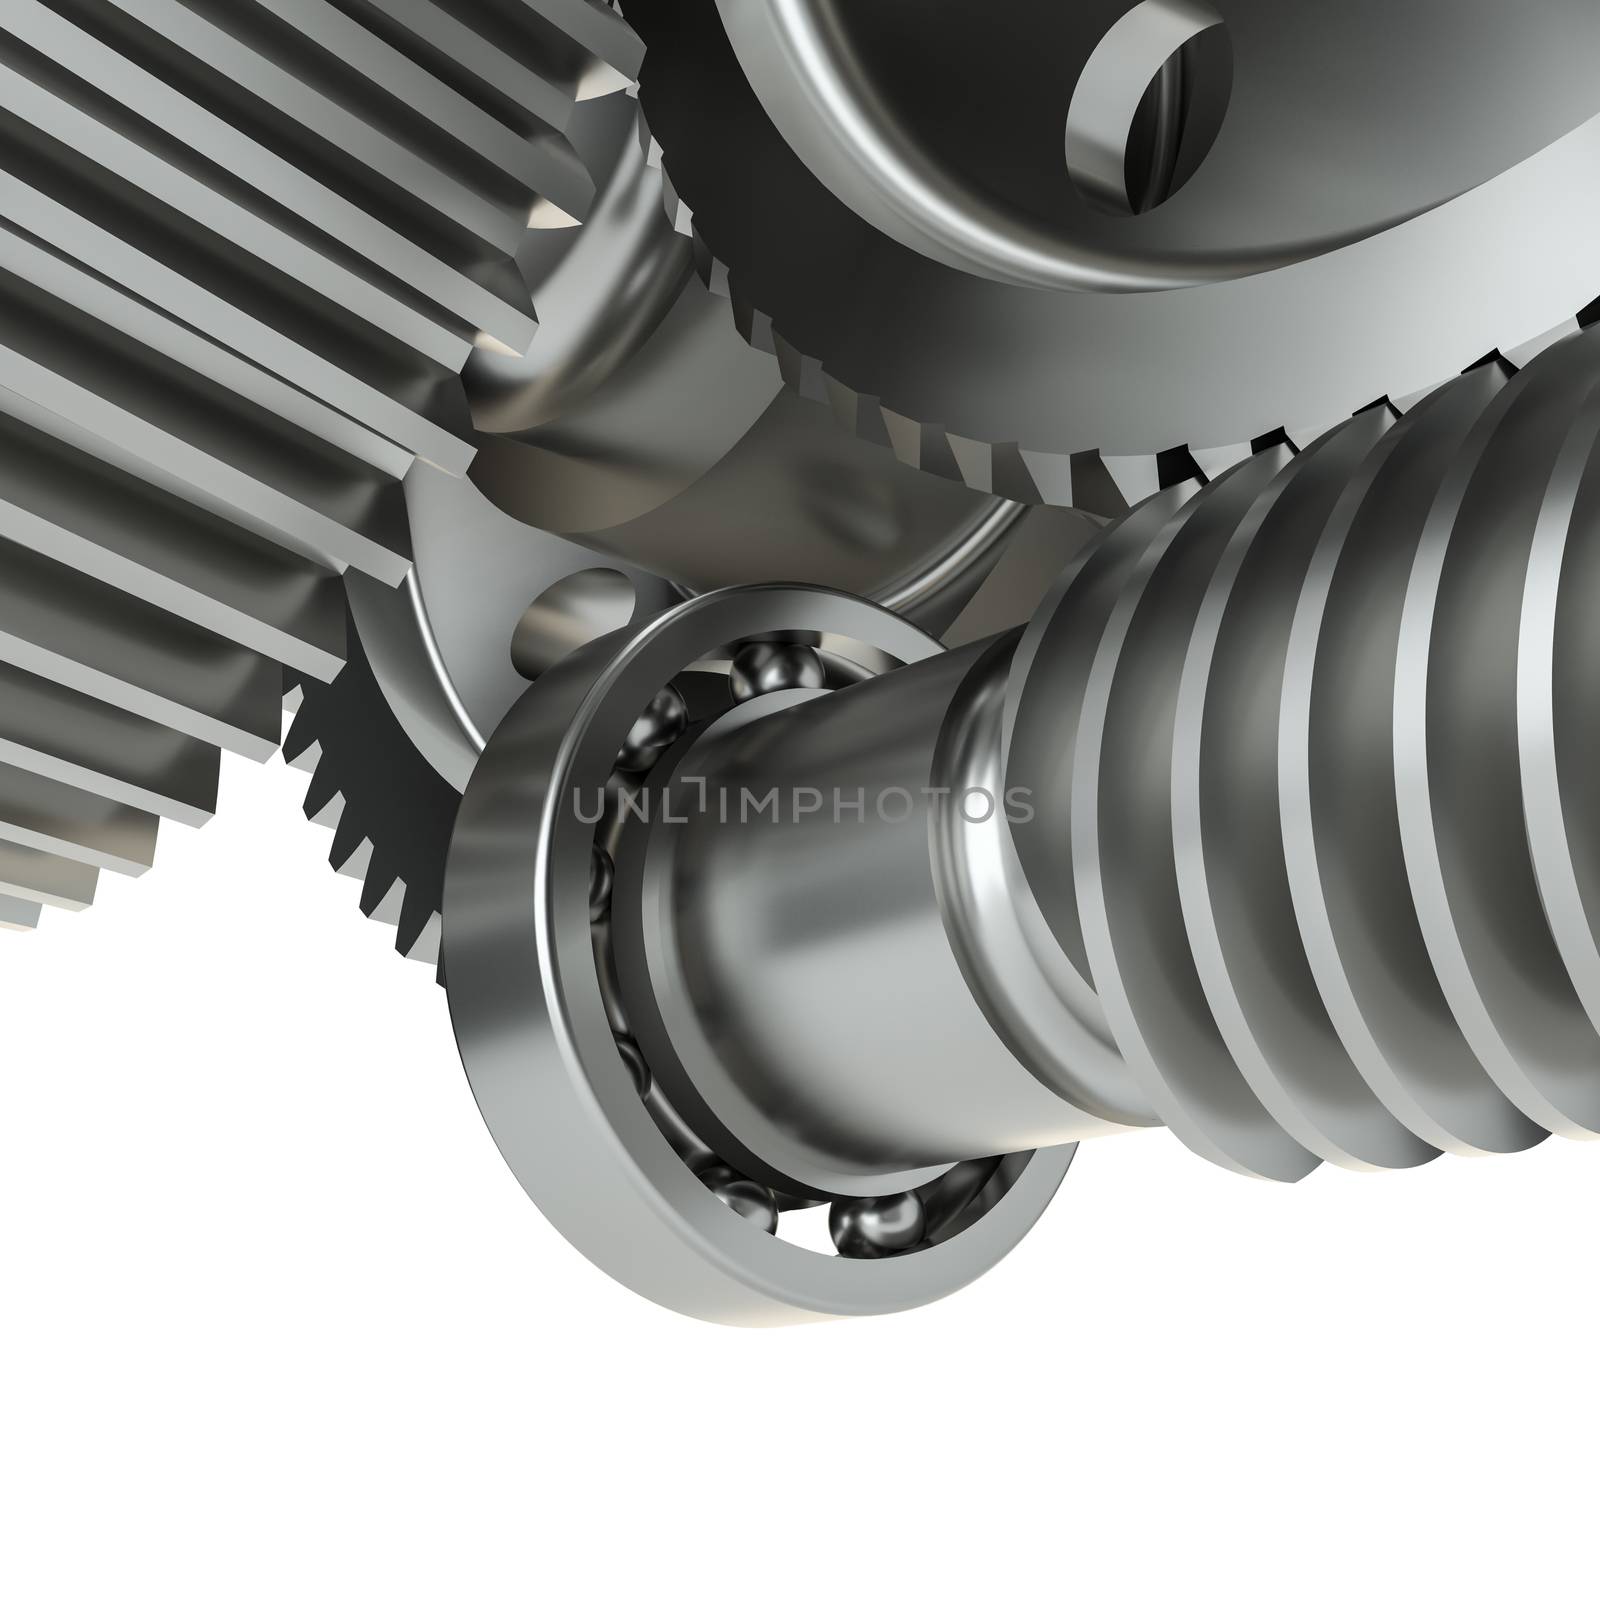 3d rendered illustration of closeup gear wheels